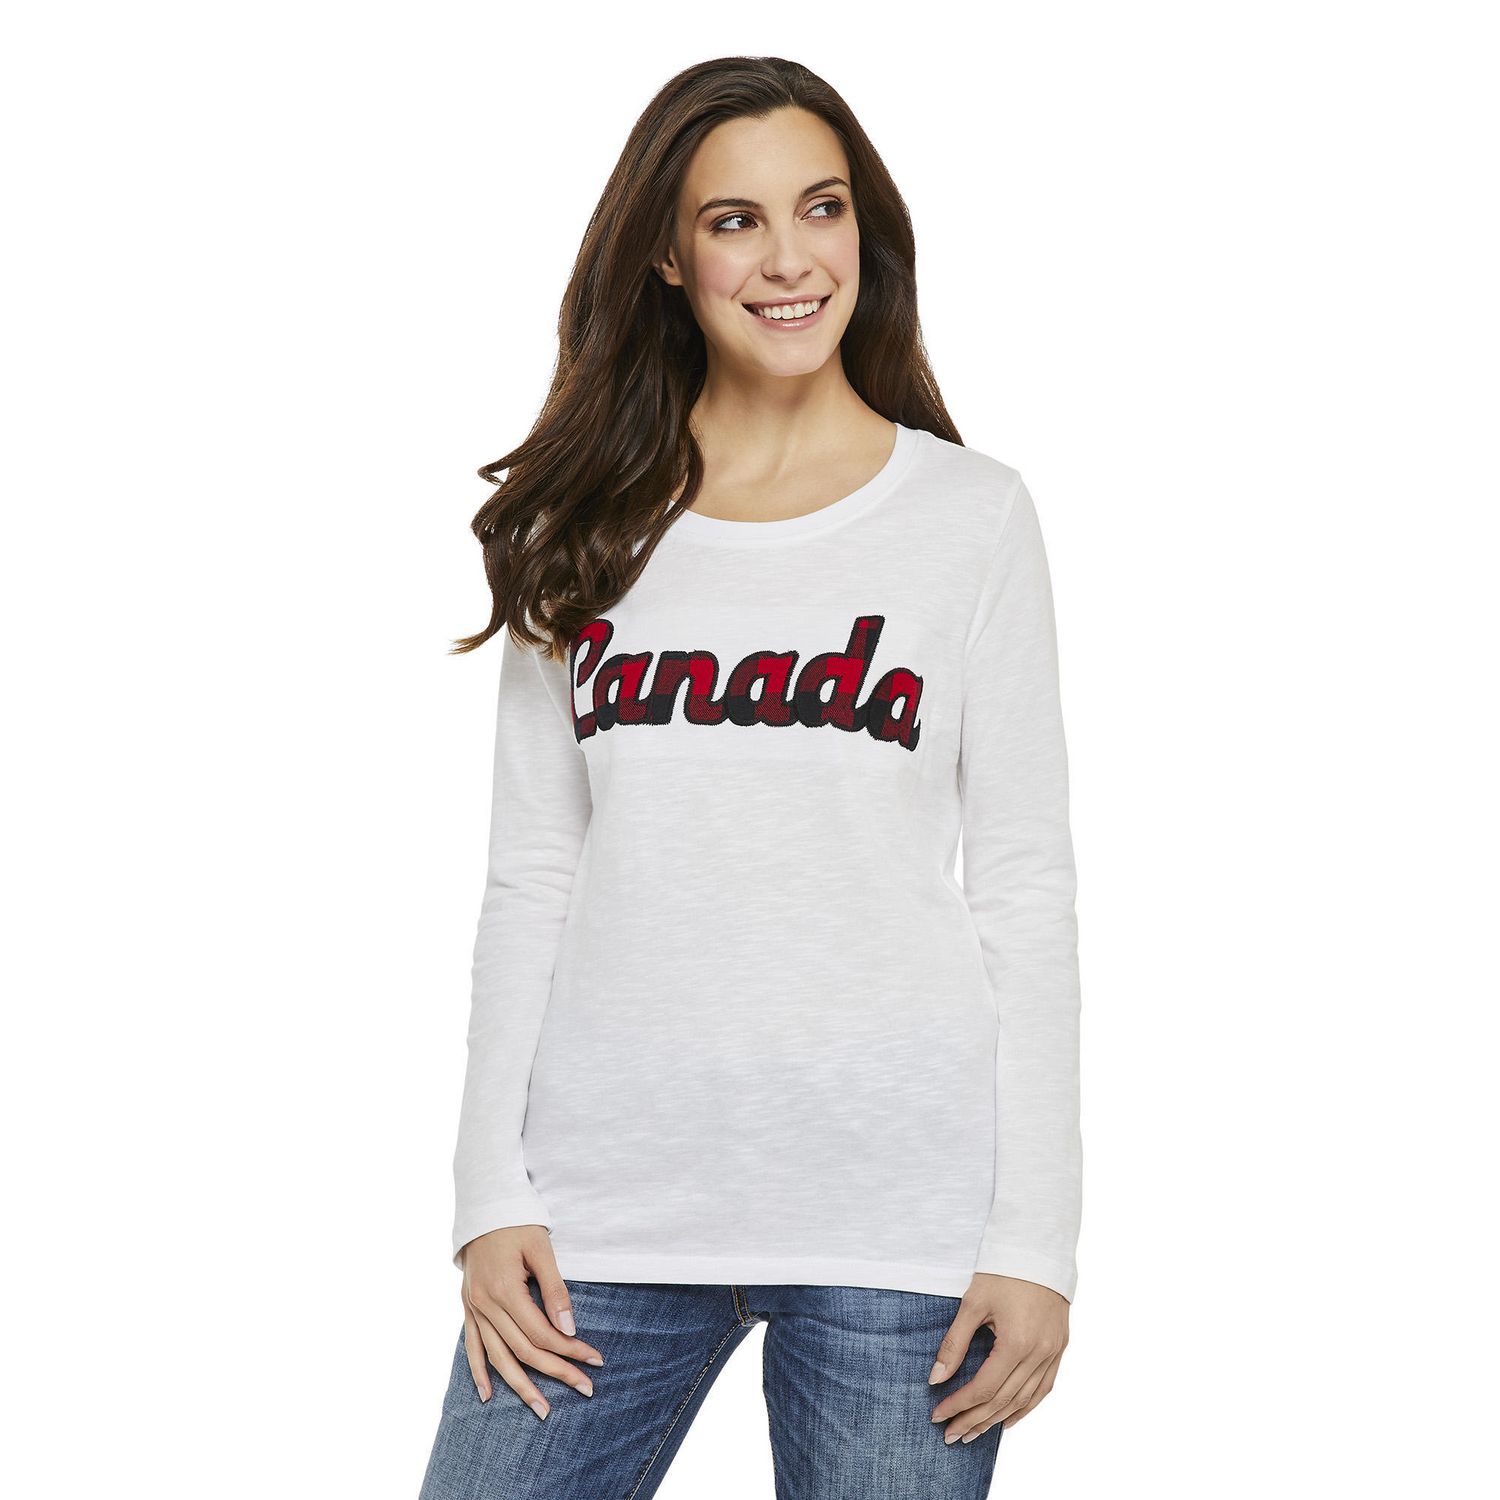 Canadiana Women's Long Sleeve Top | Walmart Canada